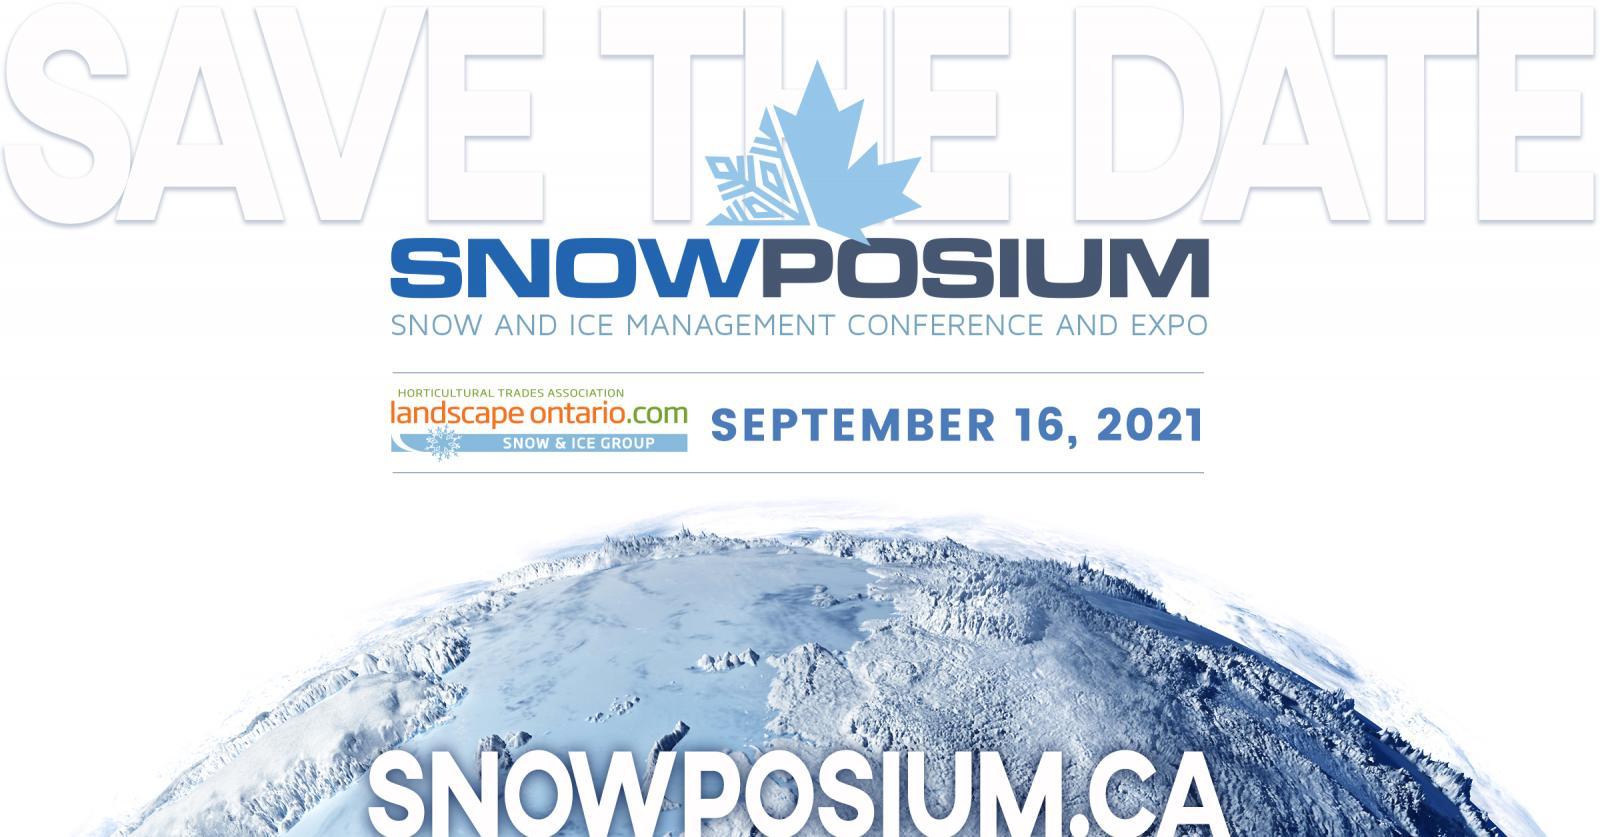 Snowposium goes virtual this September